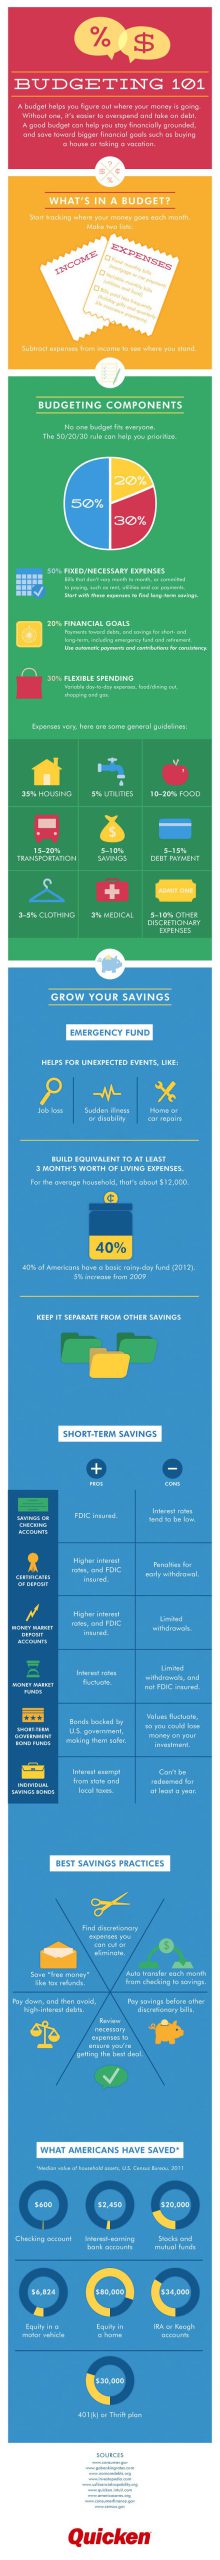 Budgeting 101 Infographic